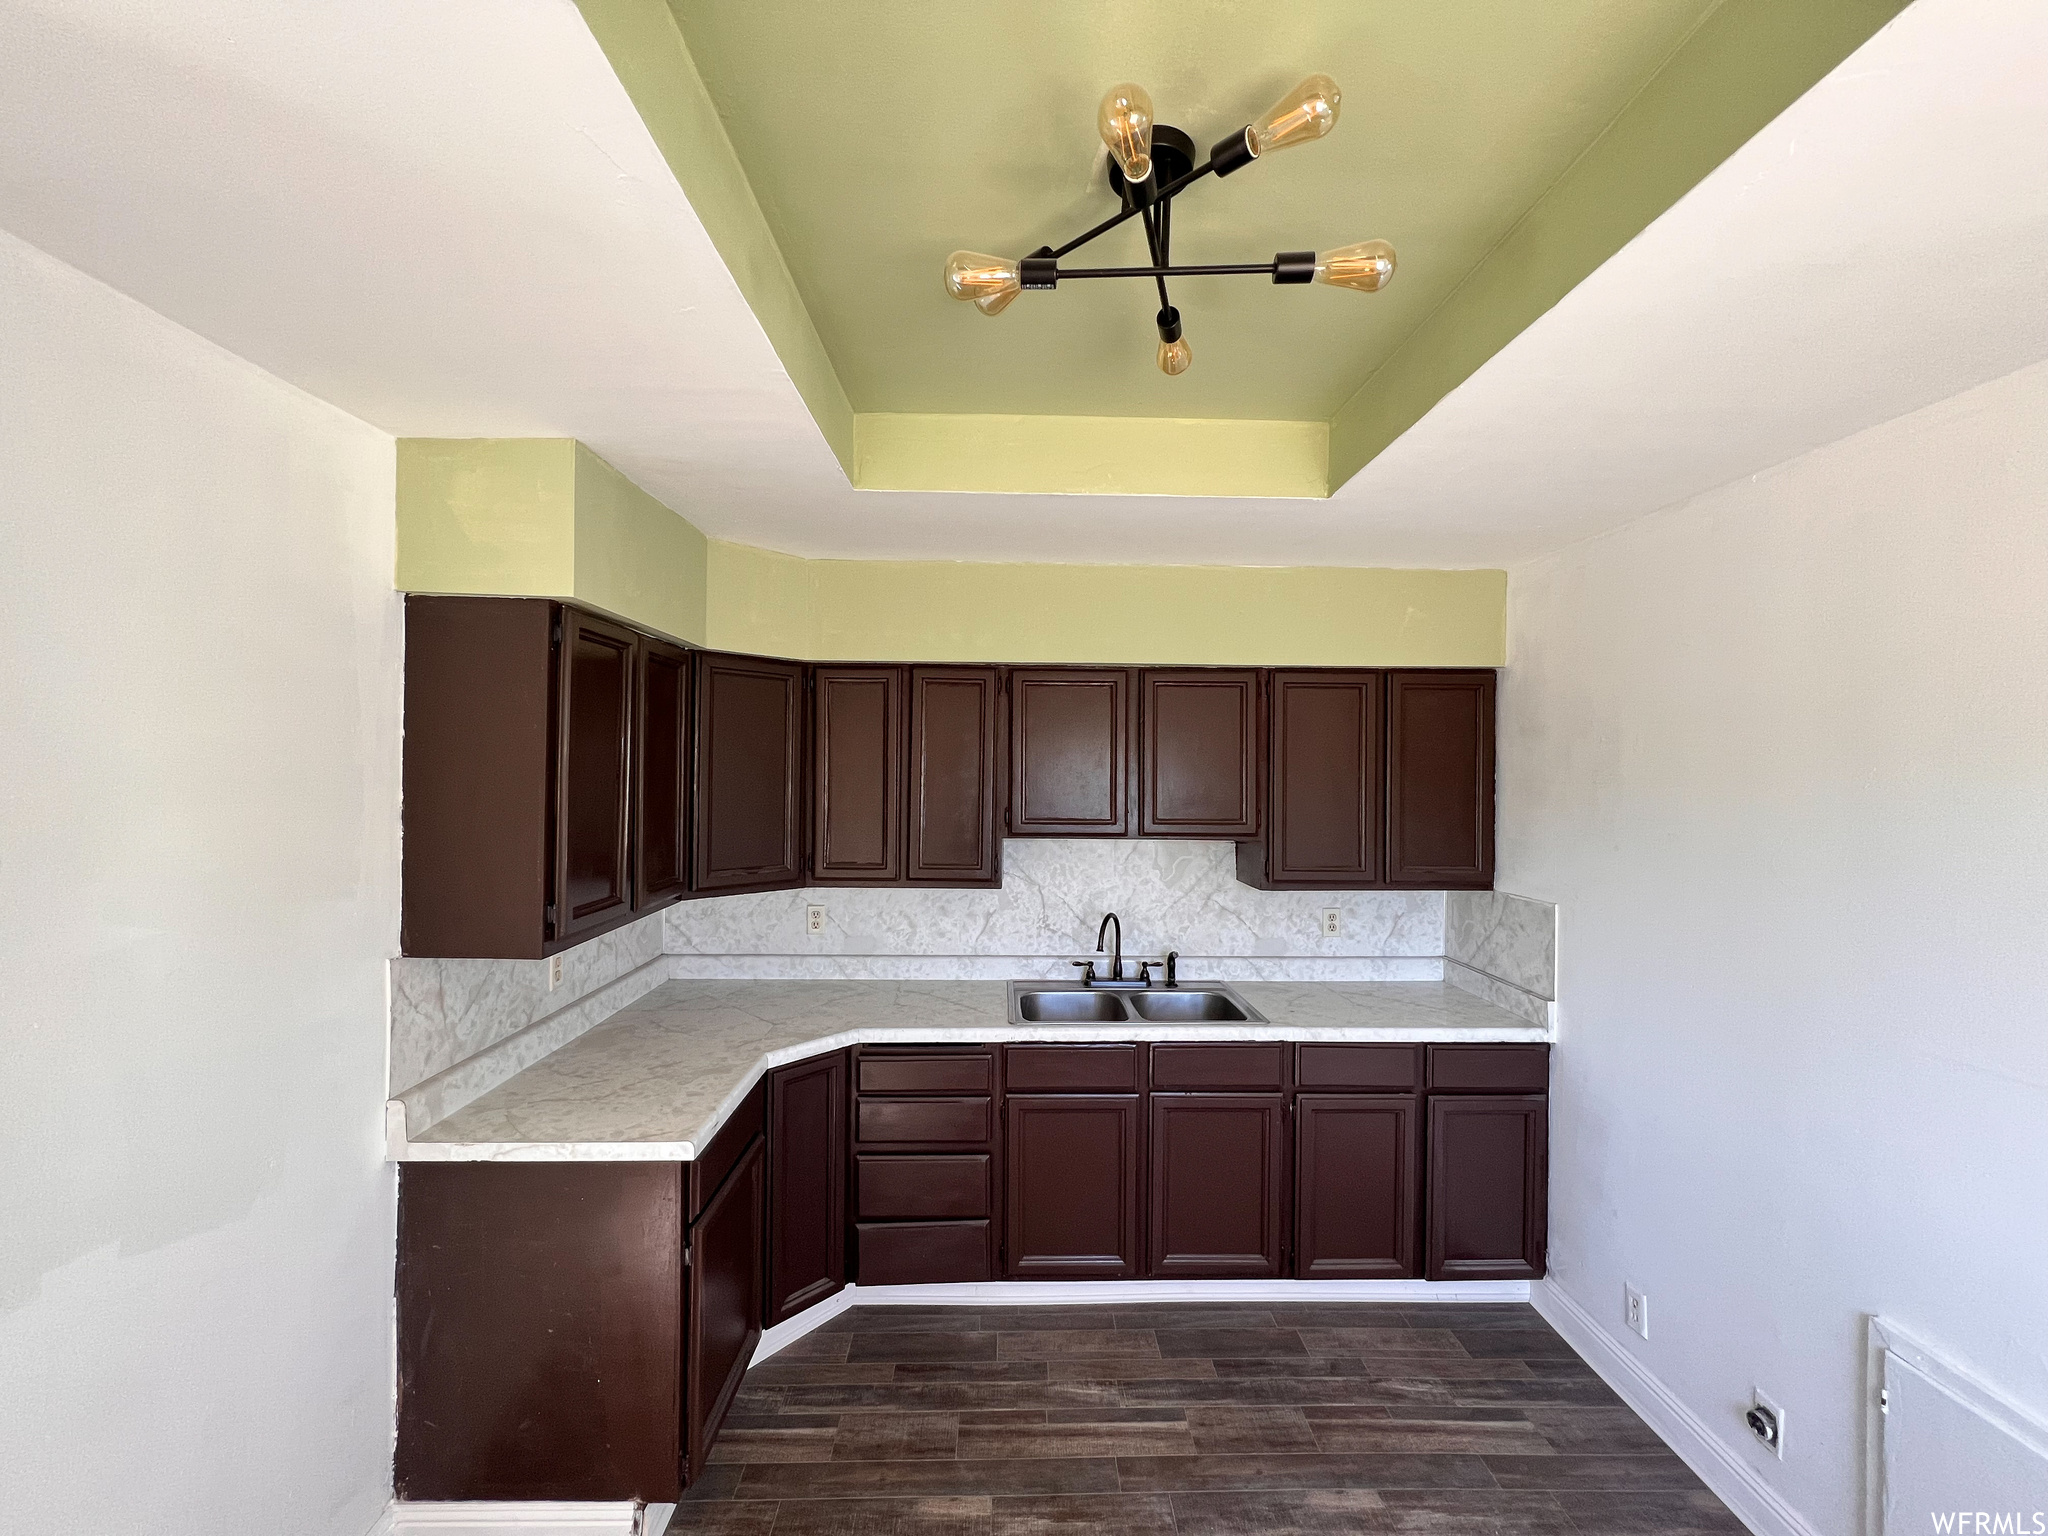 Kitchen featuring dark brown cabinets, dark floors, and light countertops